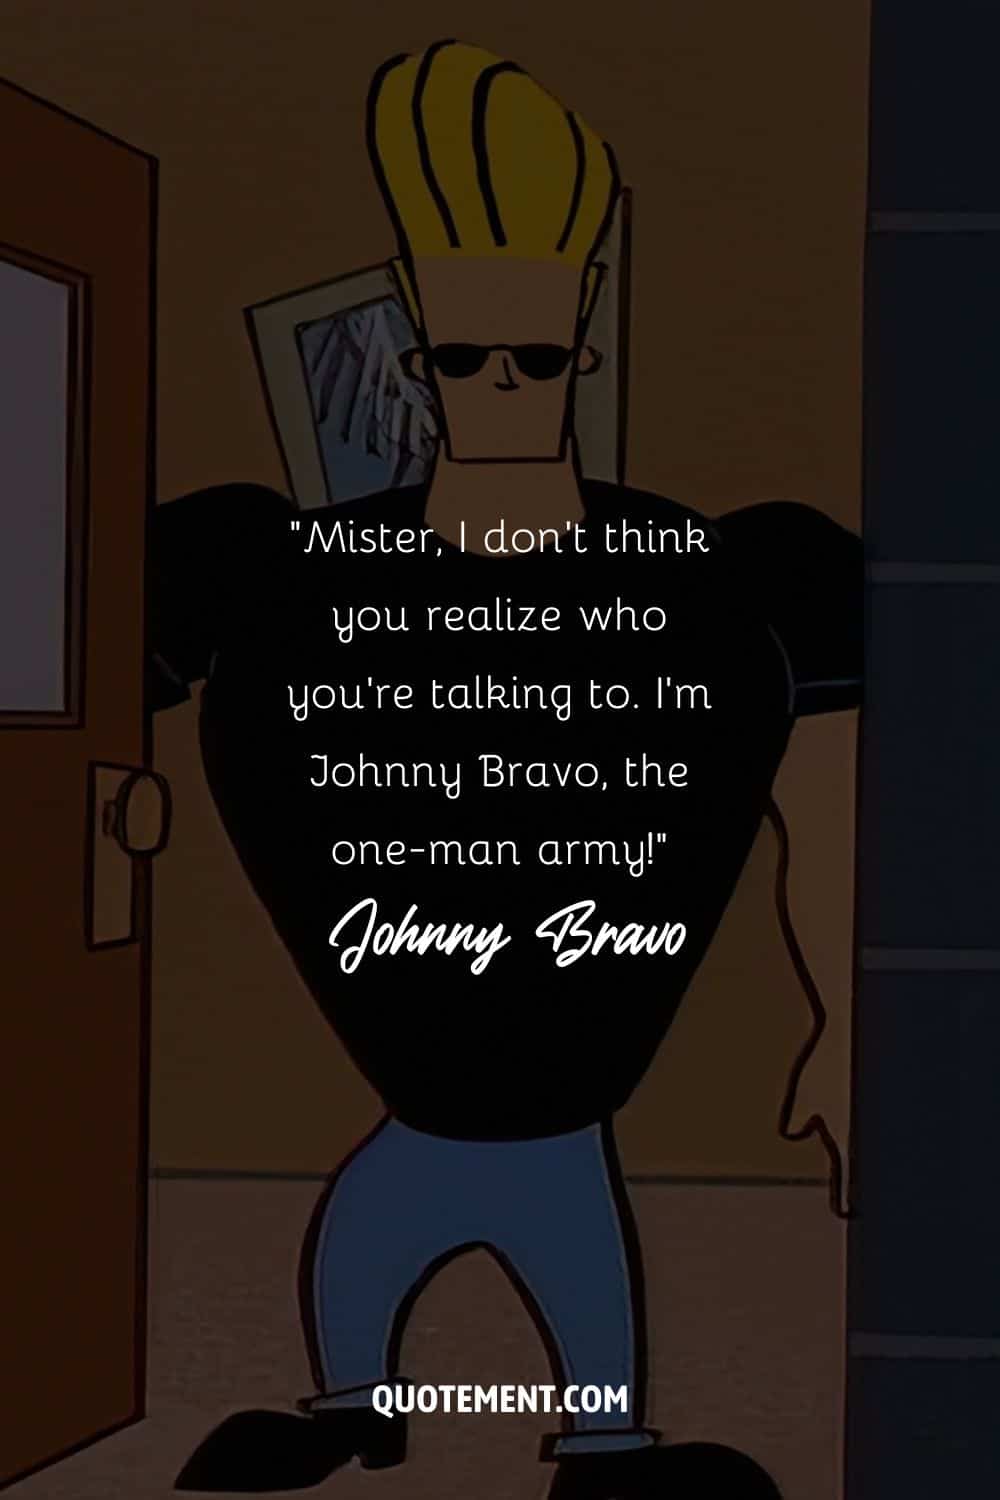 Johnny Bravo at the door representing top Johnny Bravo quote
